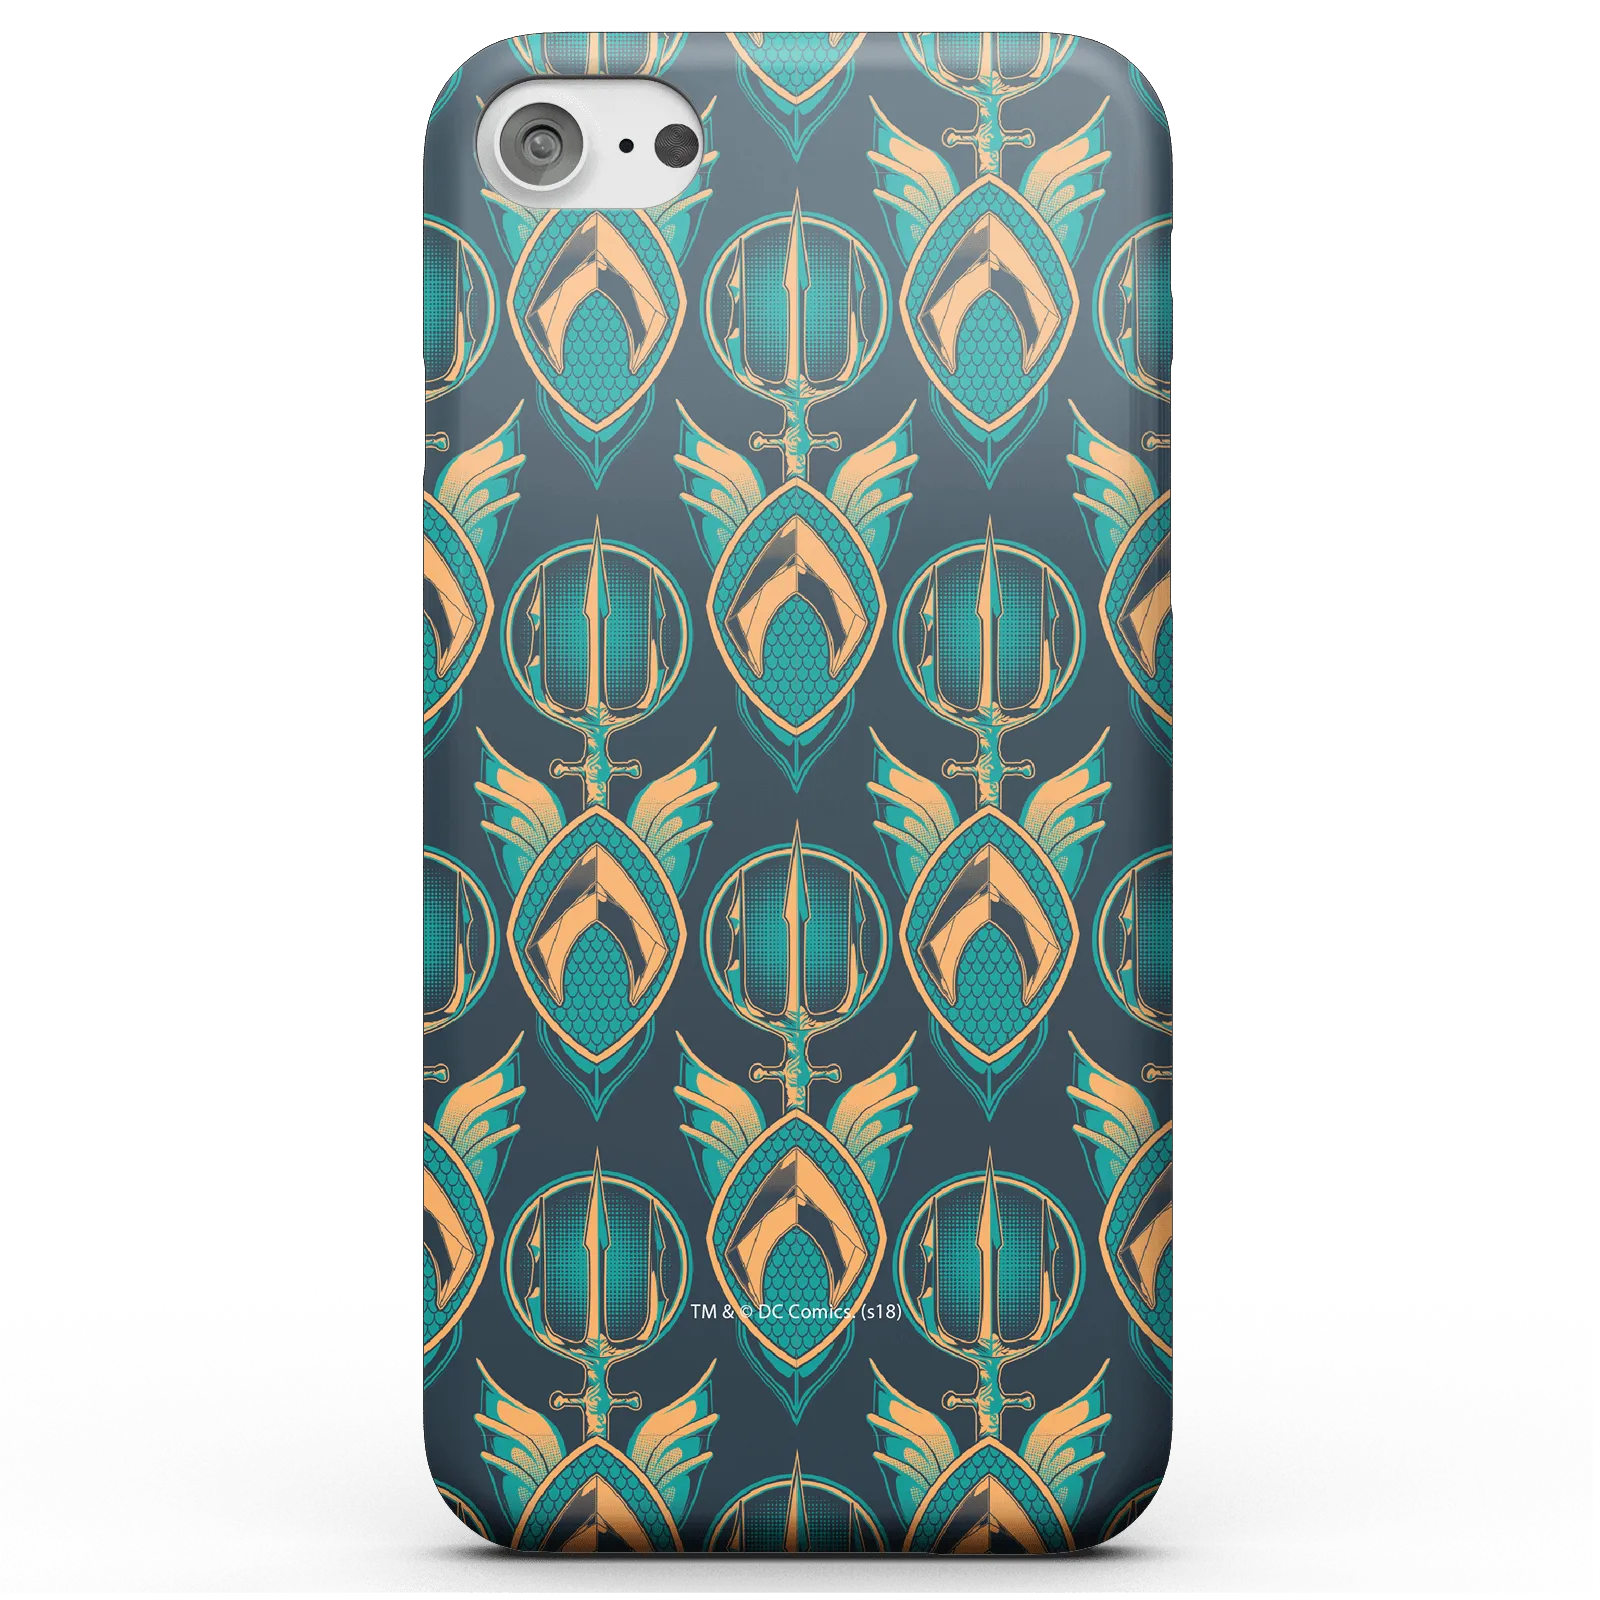 Cover telefono Aquaman per iPhone e Android - iPhone 8 Plus - Custodia rigida - Lucida